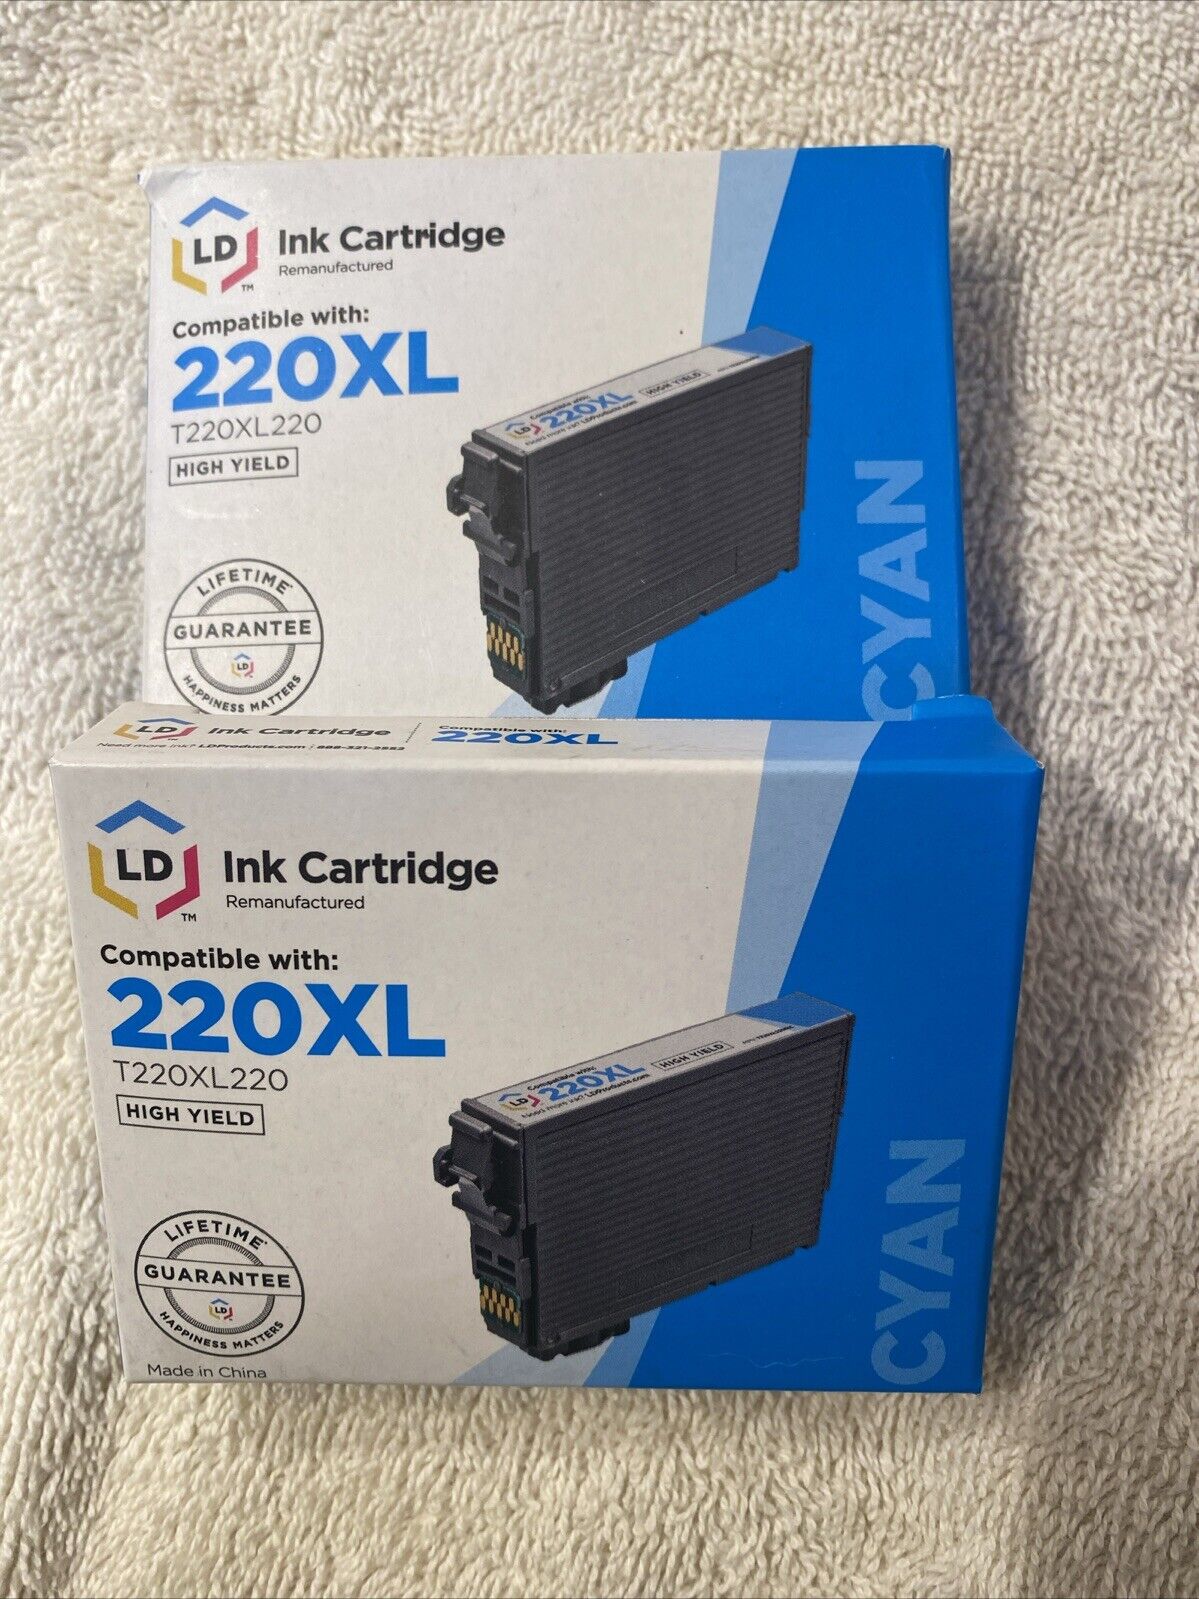 2 Brand New Sealed LD Cartridge High Yeild Cyan Expired 11/2019